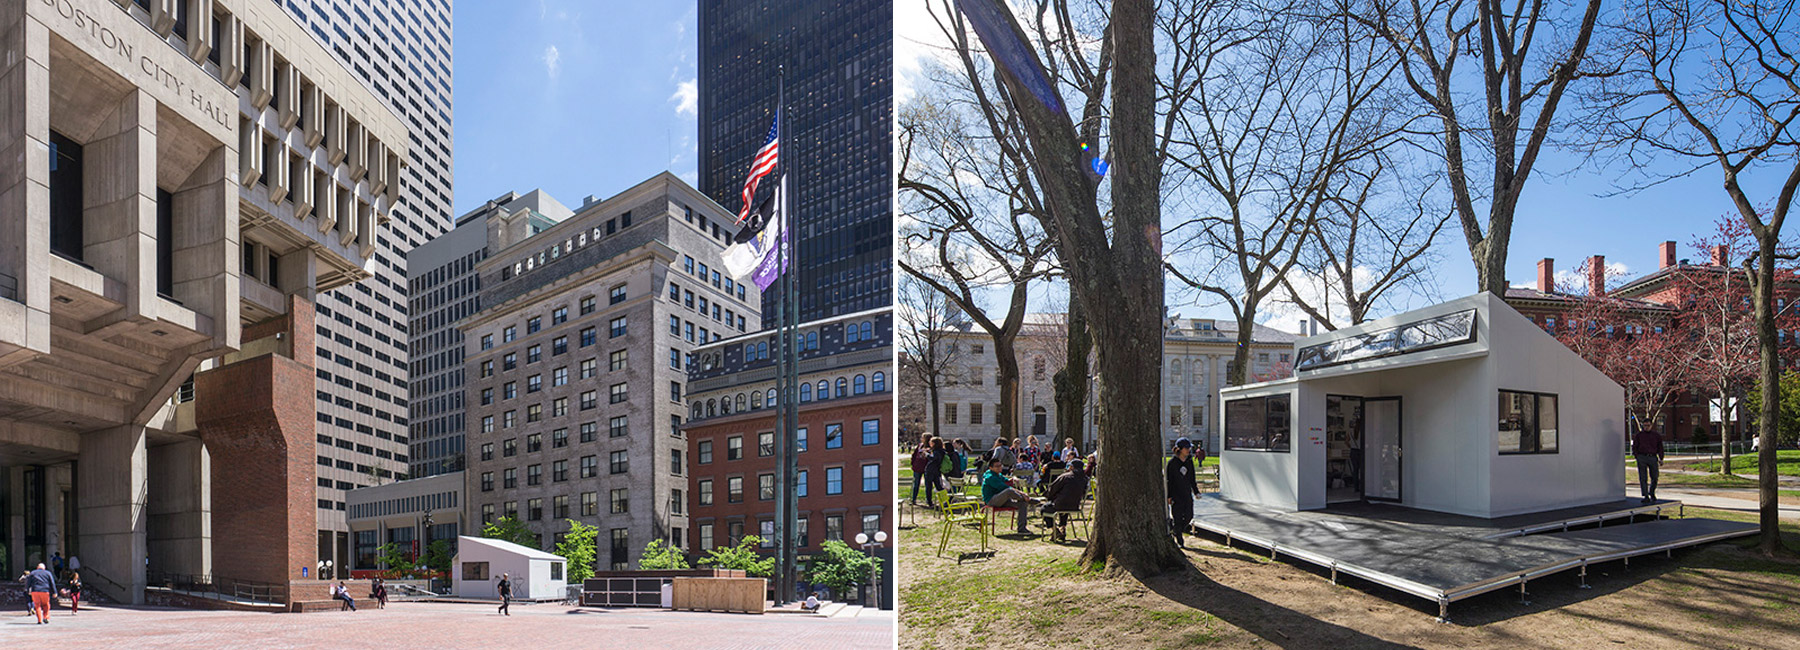 prefabricated plugin house creates temporary public spaces in harvard and boston city hall